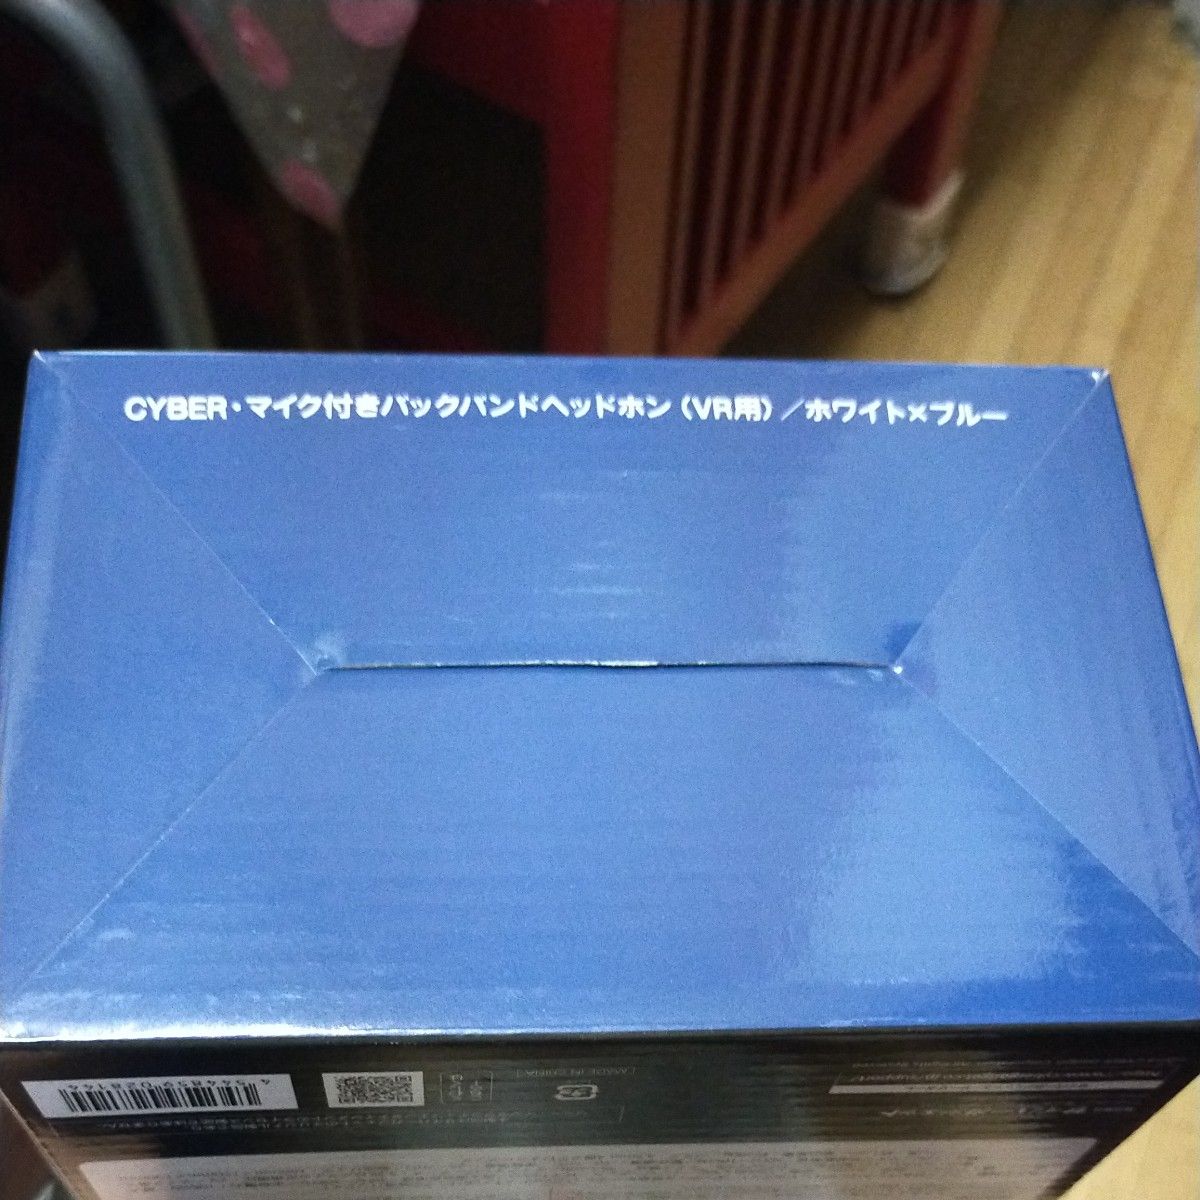 CYBER マイク付きバックバンドヘッドホン (VR 用) ホワイト×ブルー - PS4 サイバーガジェット